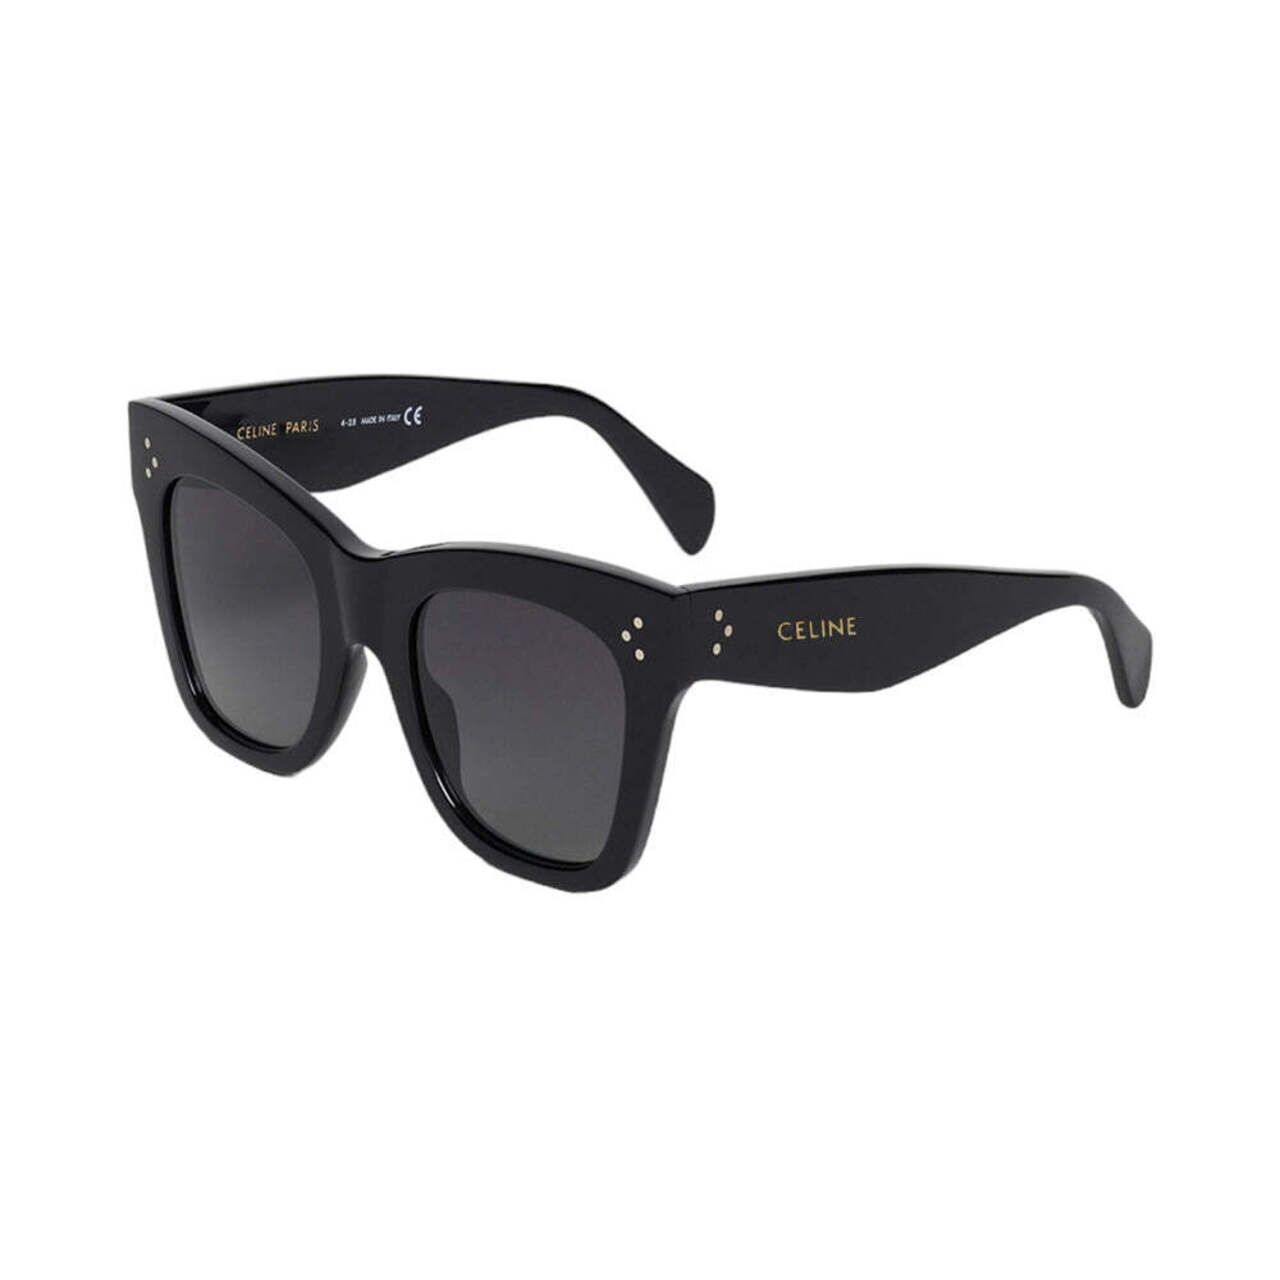 Celine Cat Eye S004 Sunglasses Acetate with Polarized Lenses Black